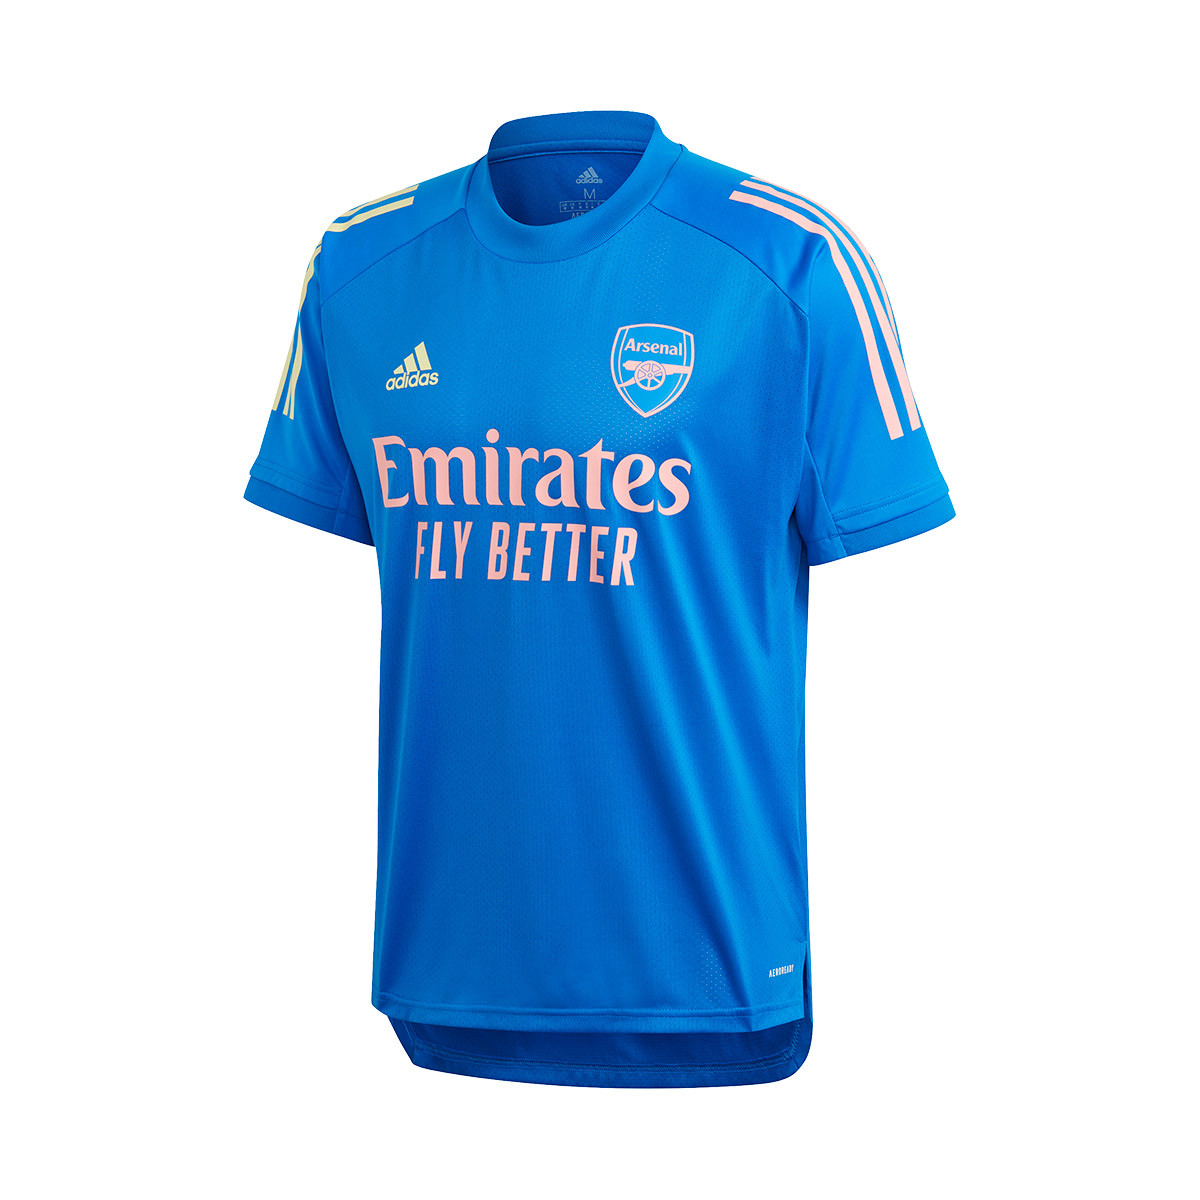 Camiseta Adidas Arsenal Fc Training 2020 2021 Glory Blue Tienda De Futbol Futbol Emotion